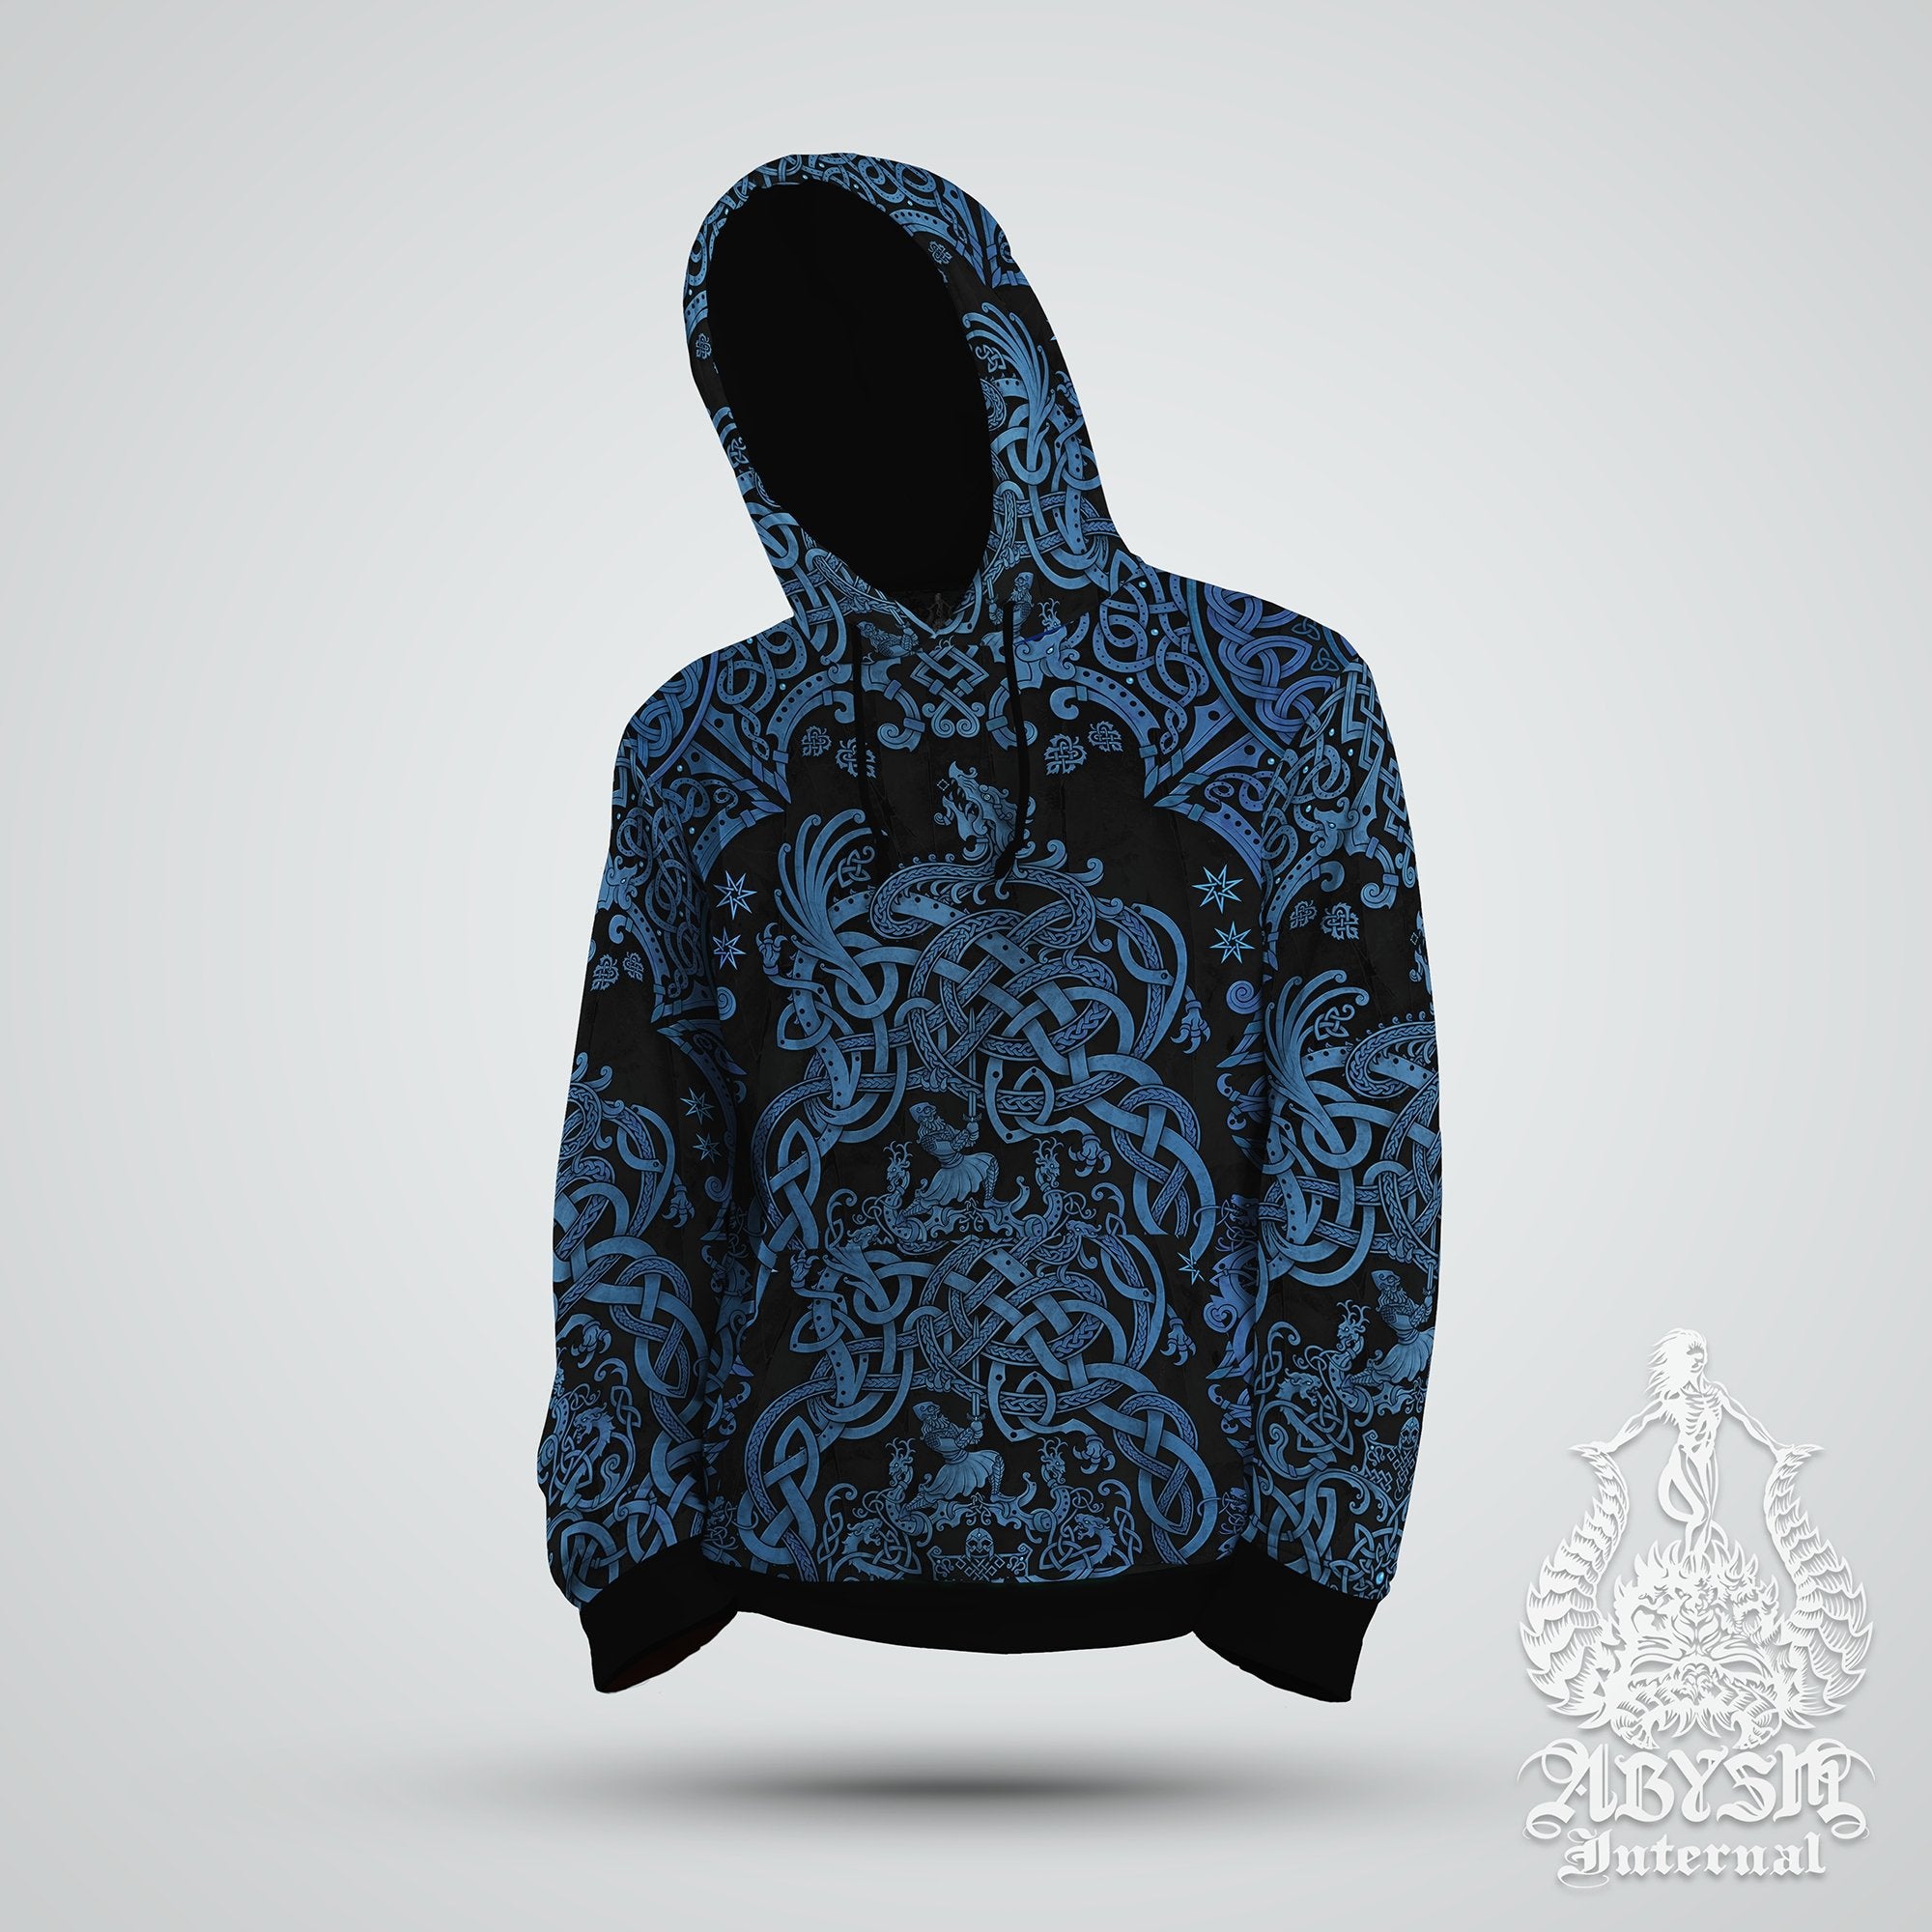 Viking Hoodie, Dragon Sweater, Concert Outfit, Norse Art Streetwear, Alternative Clothing, Unisex - Nordic Mythology, Fafnir, Black & Blue - Abysm Internal